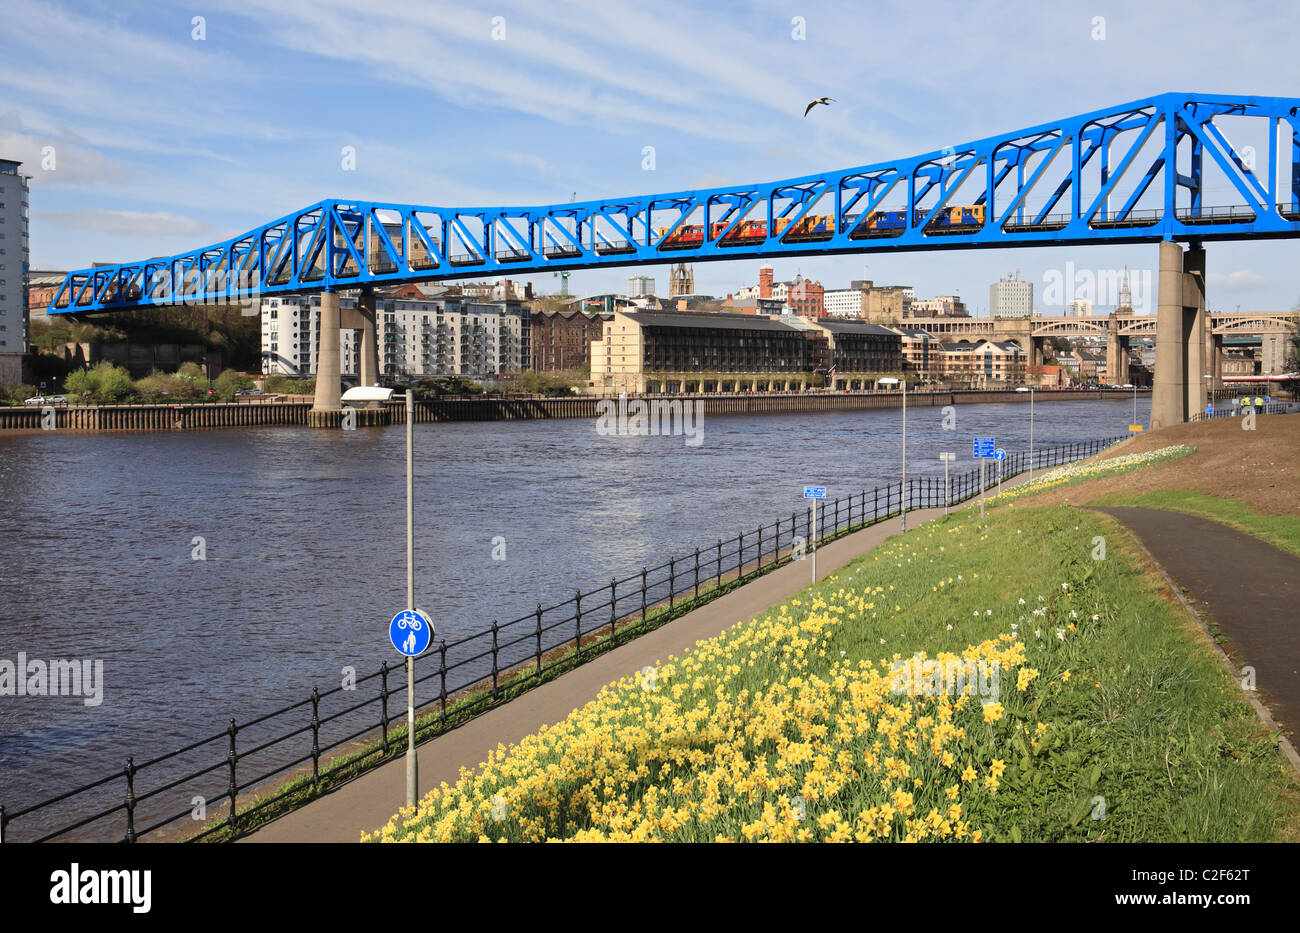 A Tyne and Wear Metro train crosses the river Tyne between Gateshead and Newcastle, north east England, UK Stock Photo